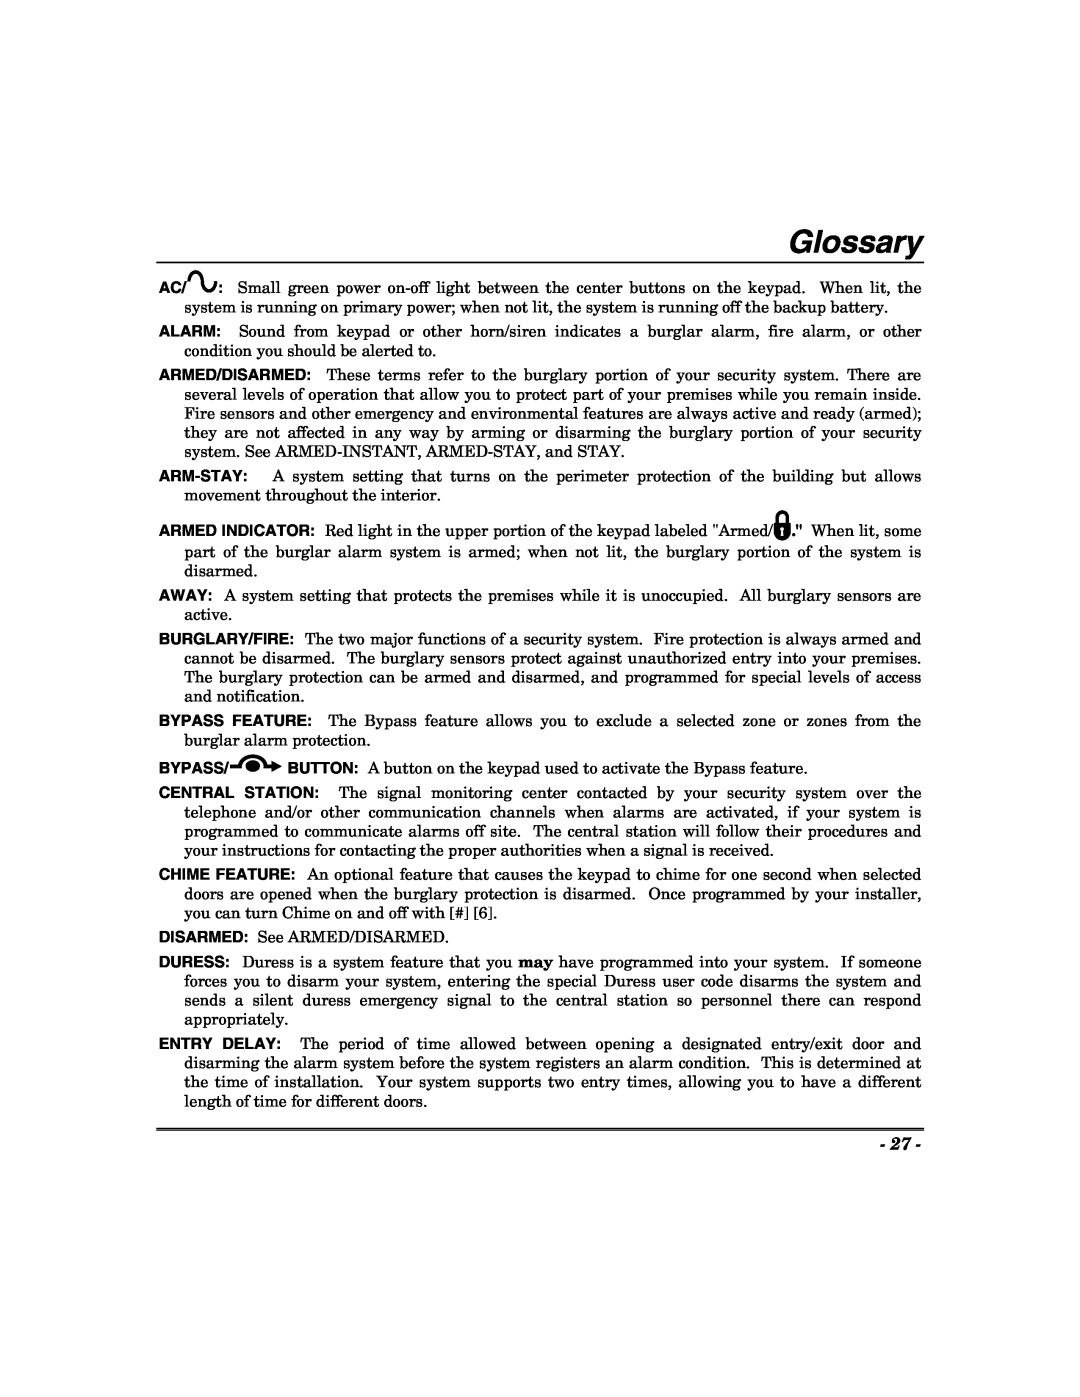 Honeywell 848, 400, 600, 624 manual Glossary, Bypass 